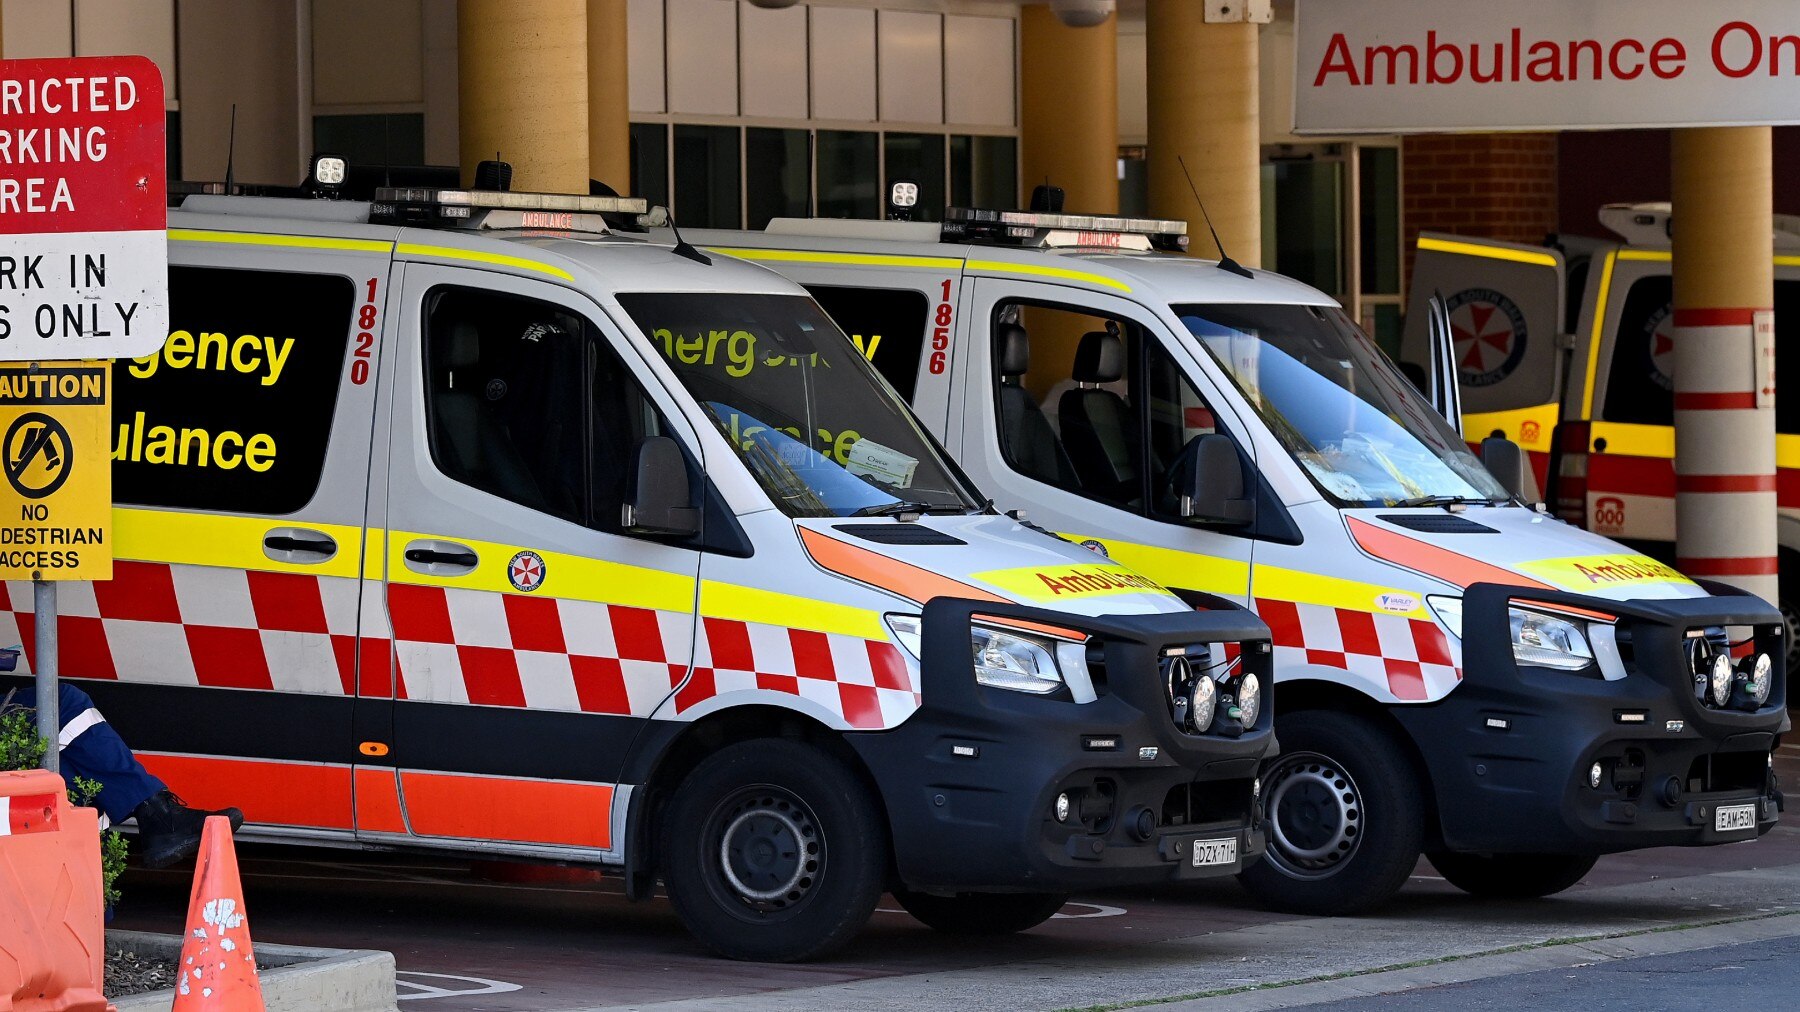 Ambulances AAP Image/Bianca De Marchi